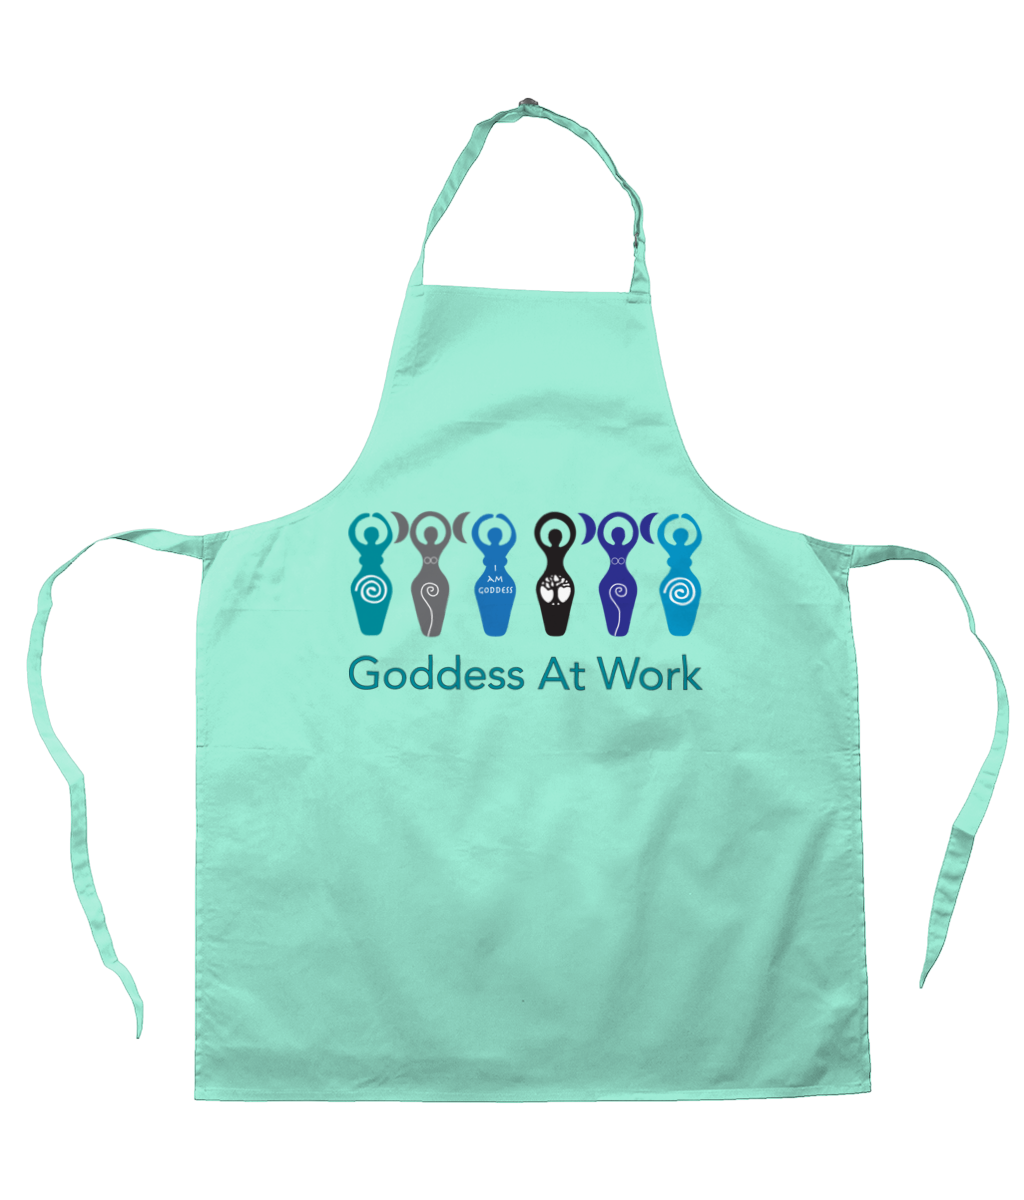 Apron 'Goddess At Work'